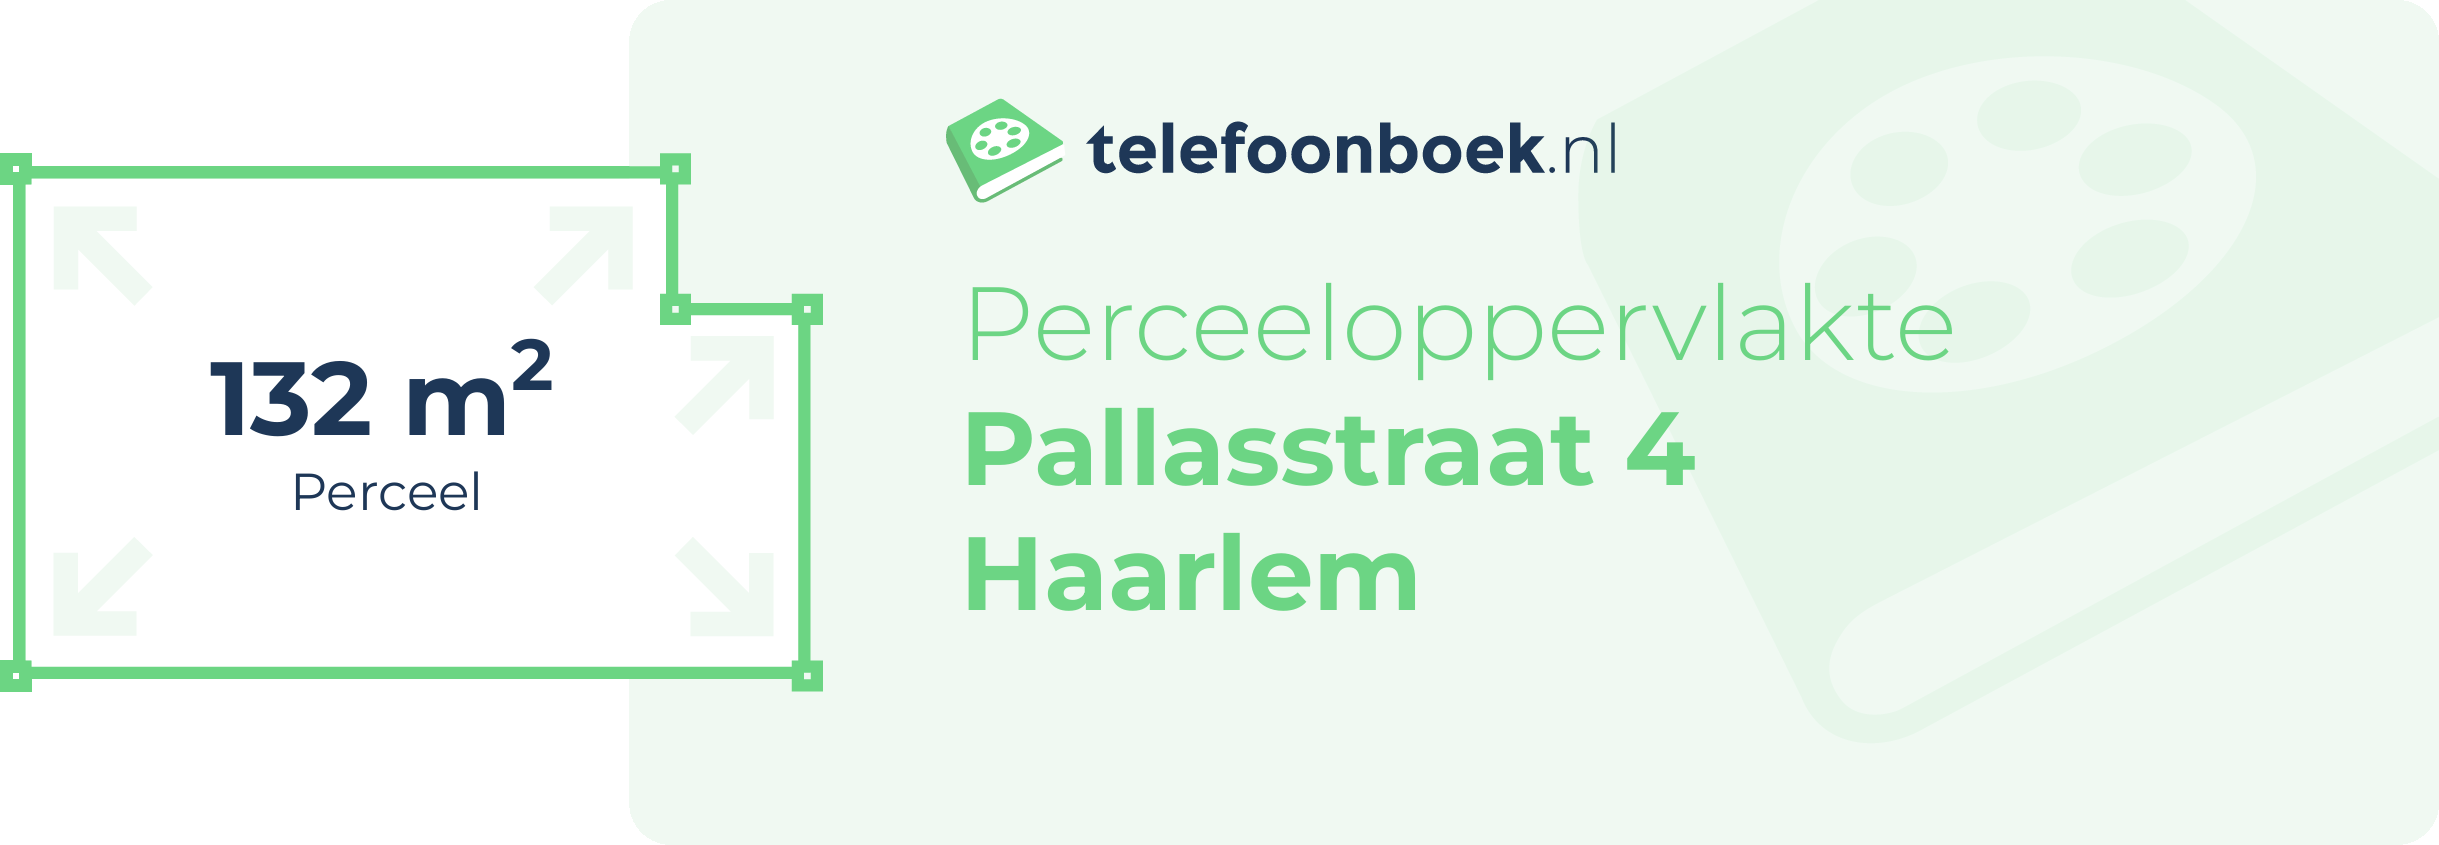 Perceeloppervlakte Pallasstraat 4 Haarlem